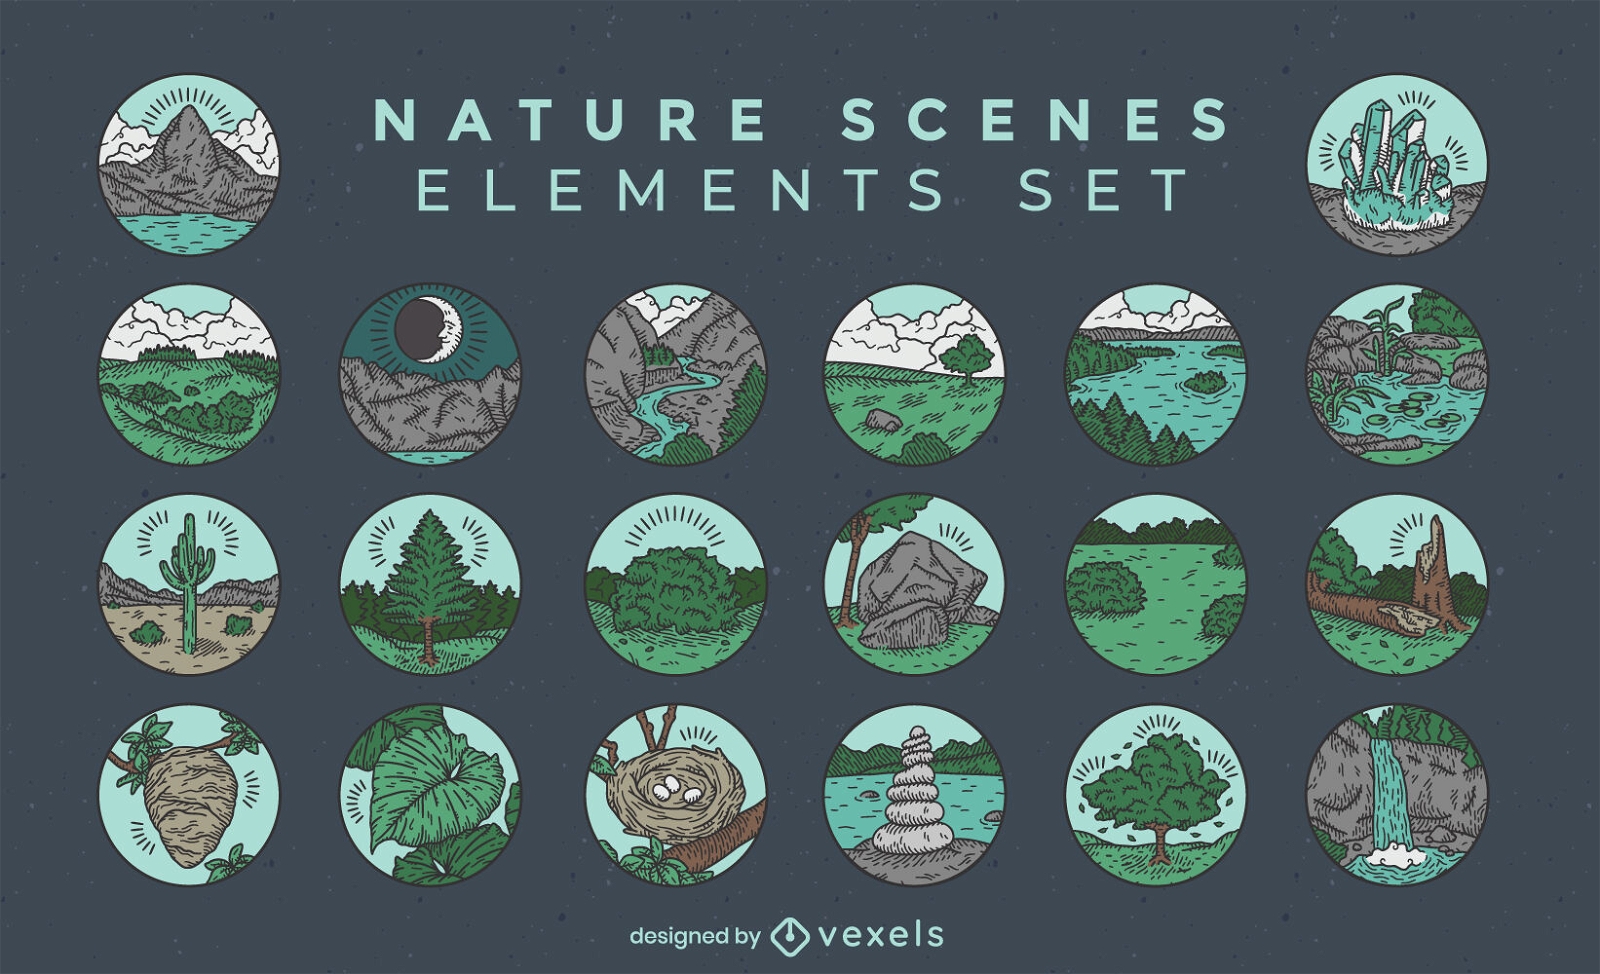 Beautiful nature elements set